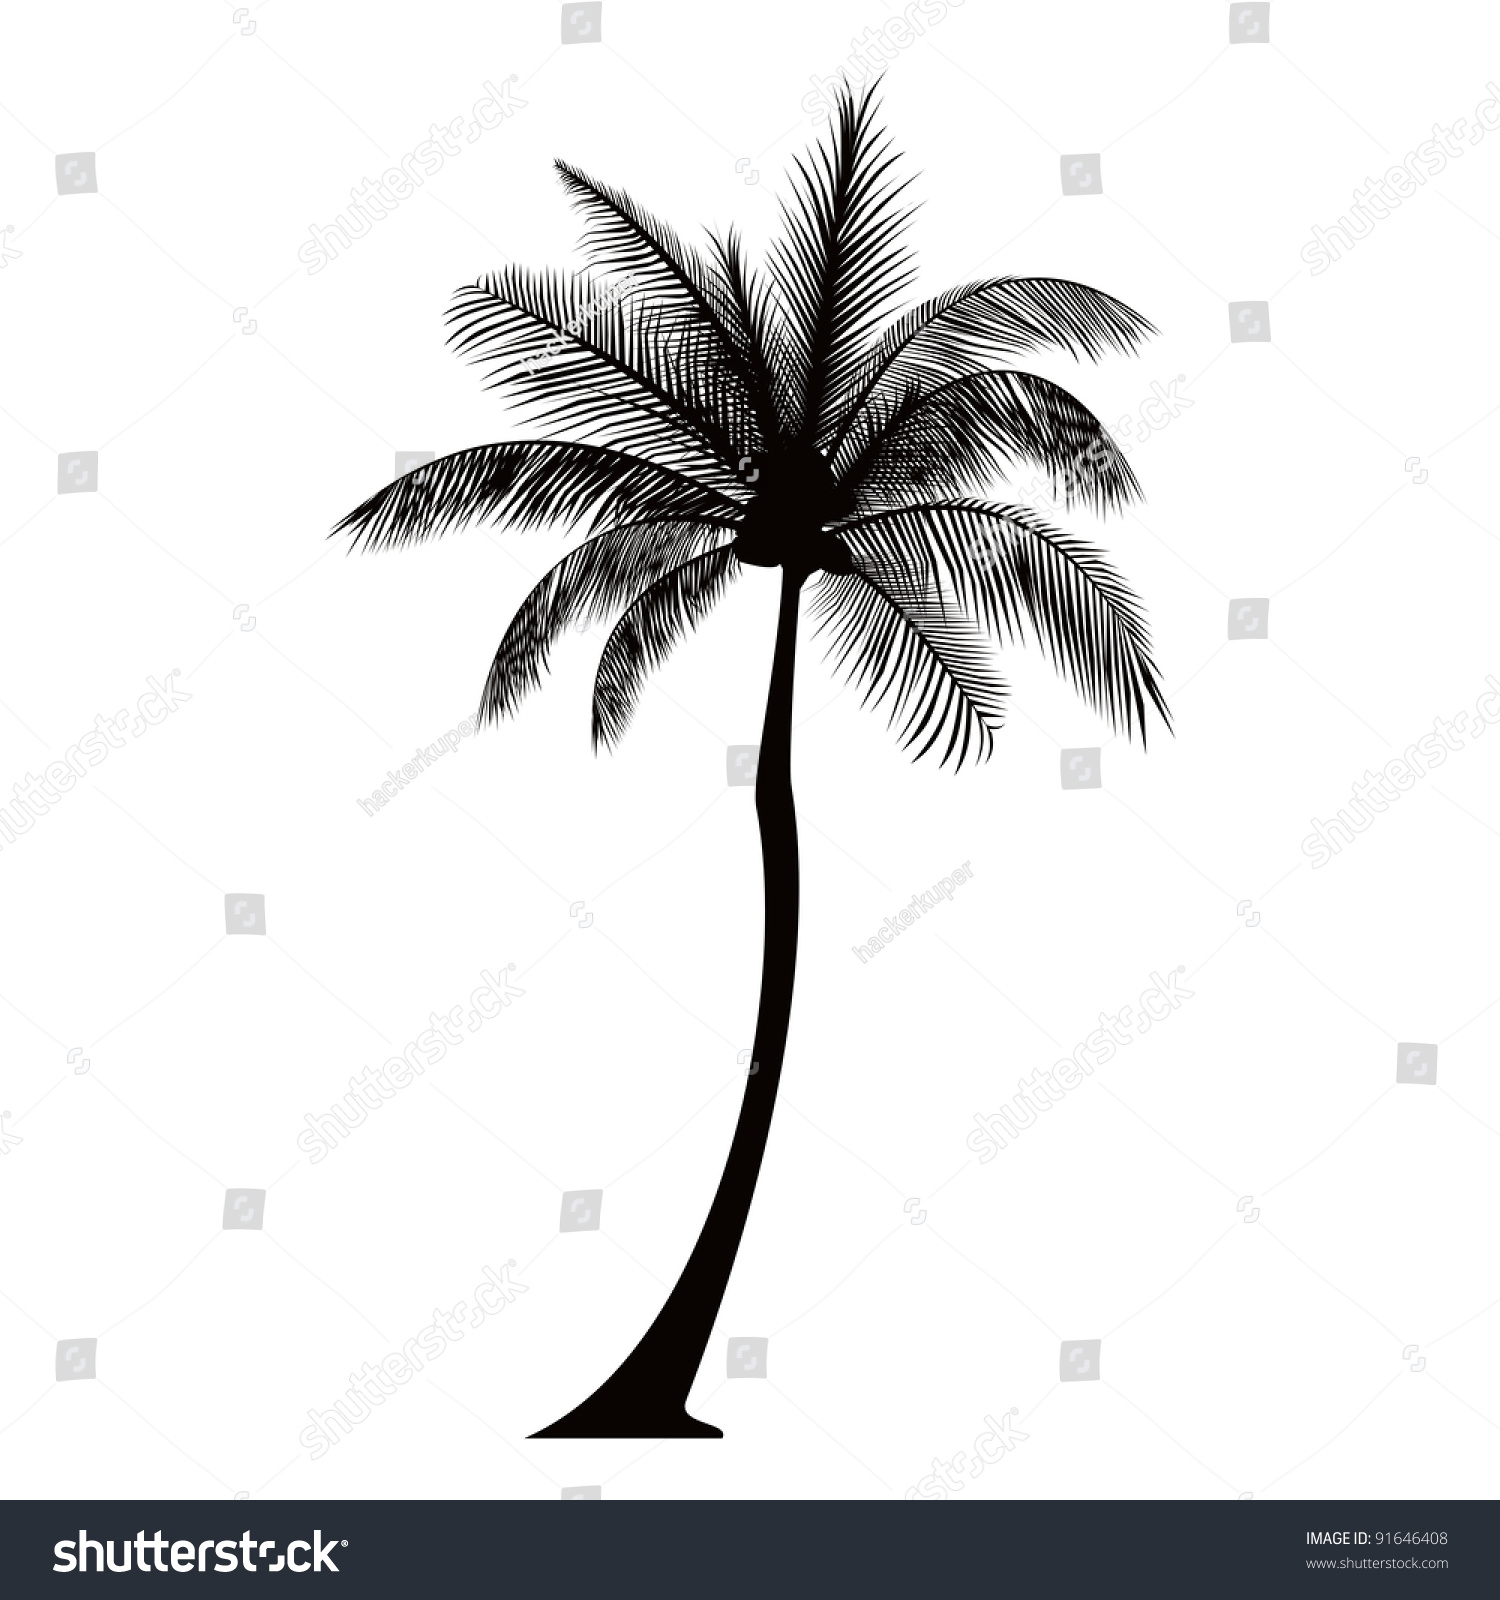 Dark Tall Palm Tree Silhouette Stock Photo 91646408 : Shutterstock